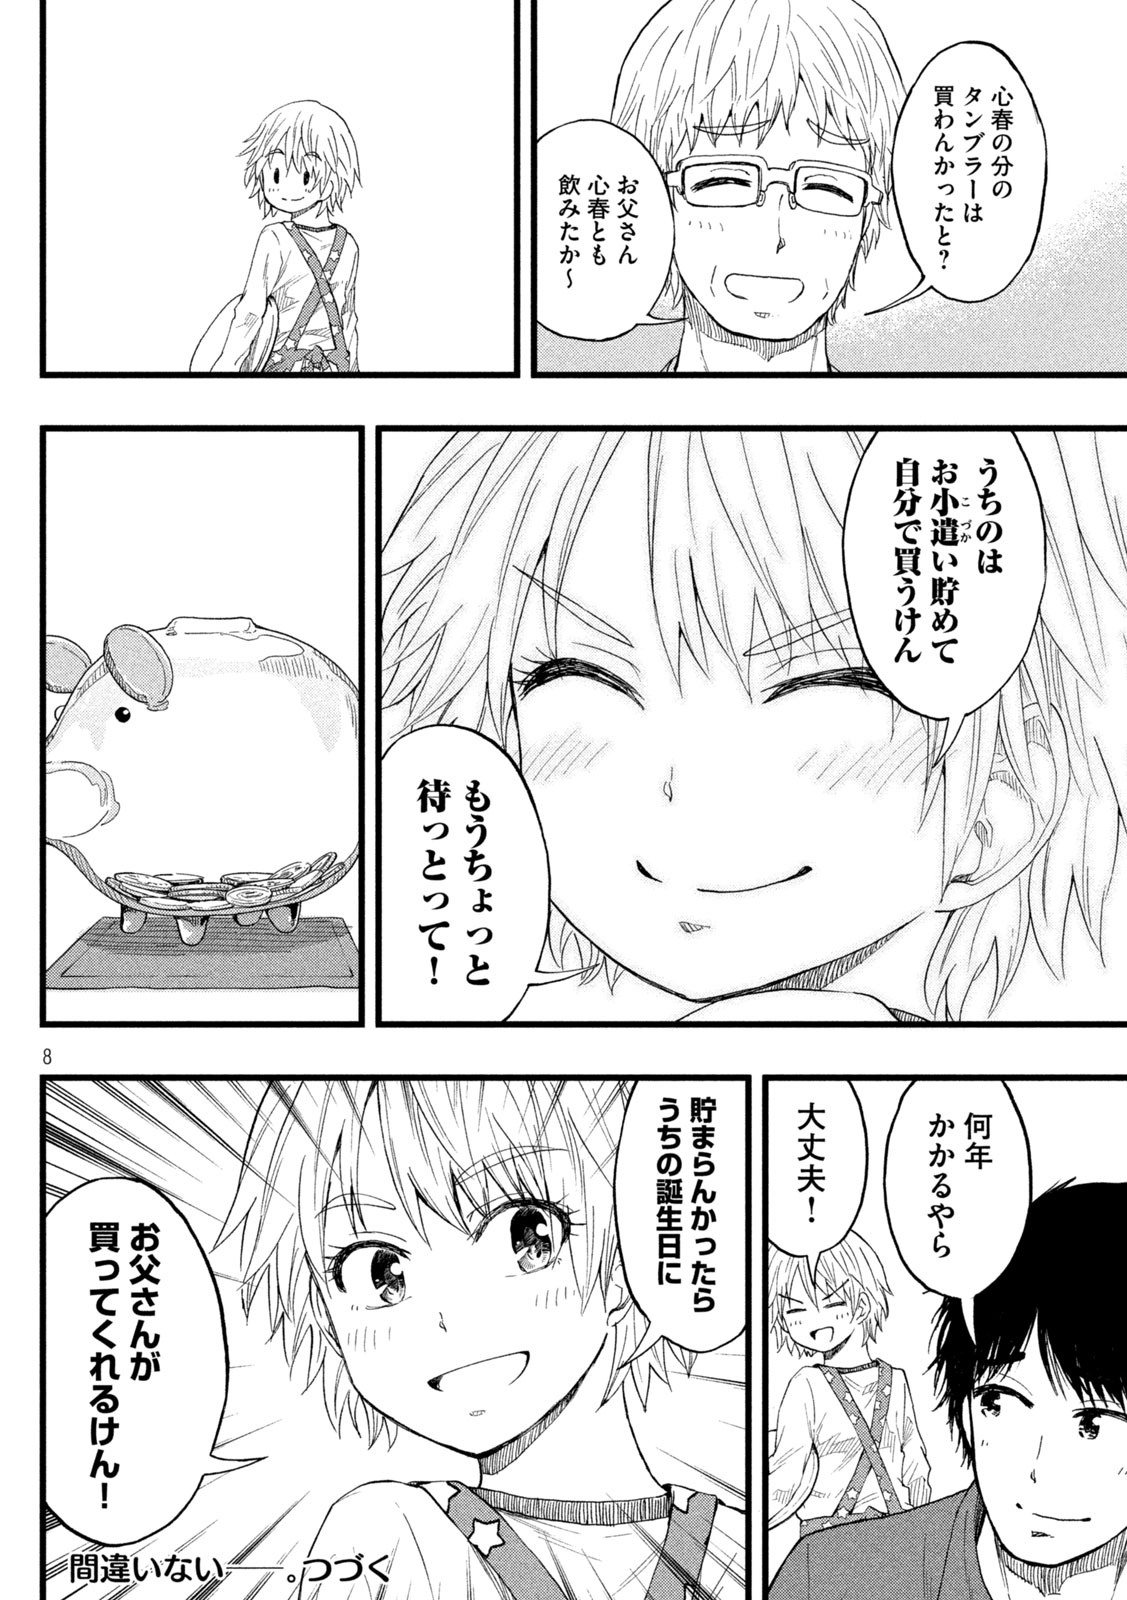 Koharu haru! - Chapter 62 - Page 4